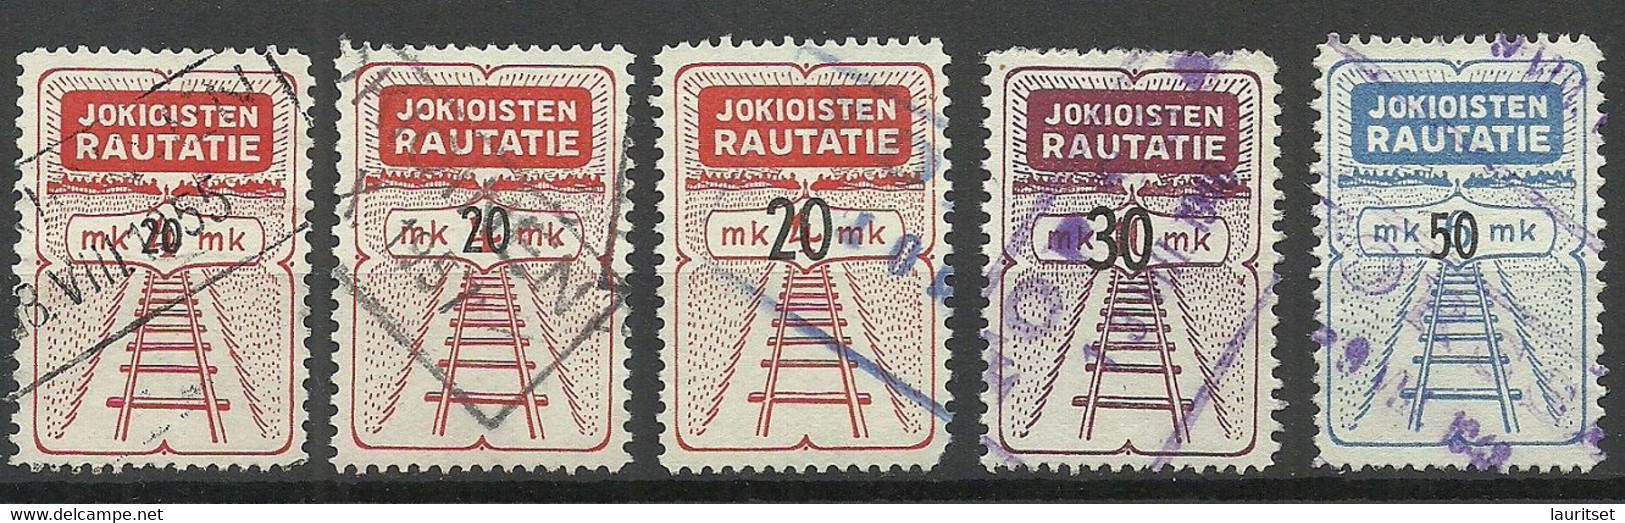 FINLAND FINNLAND 1946-1953 Jokioisten Railway Stamps O - Paketmarken